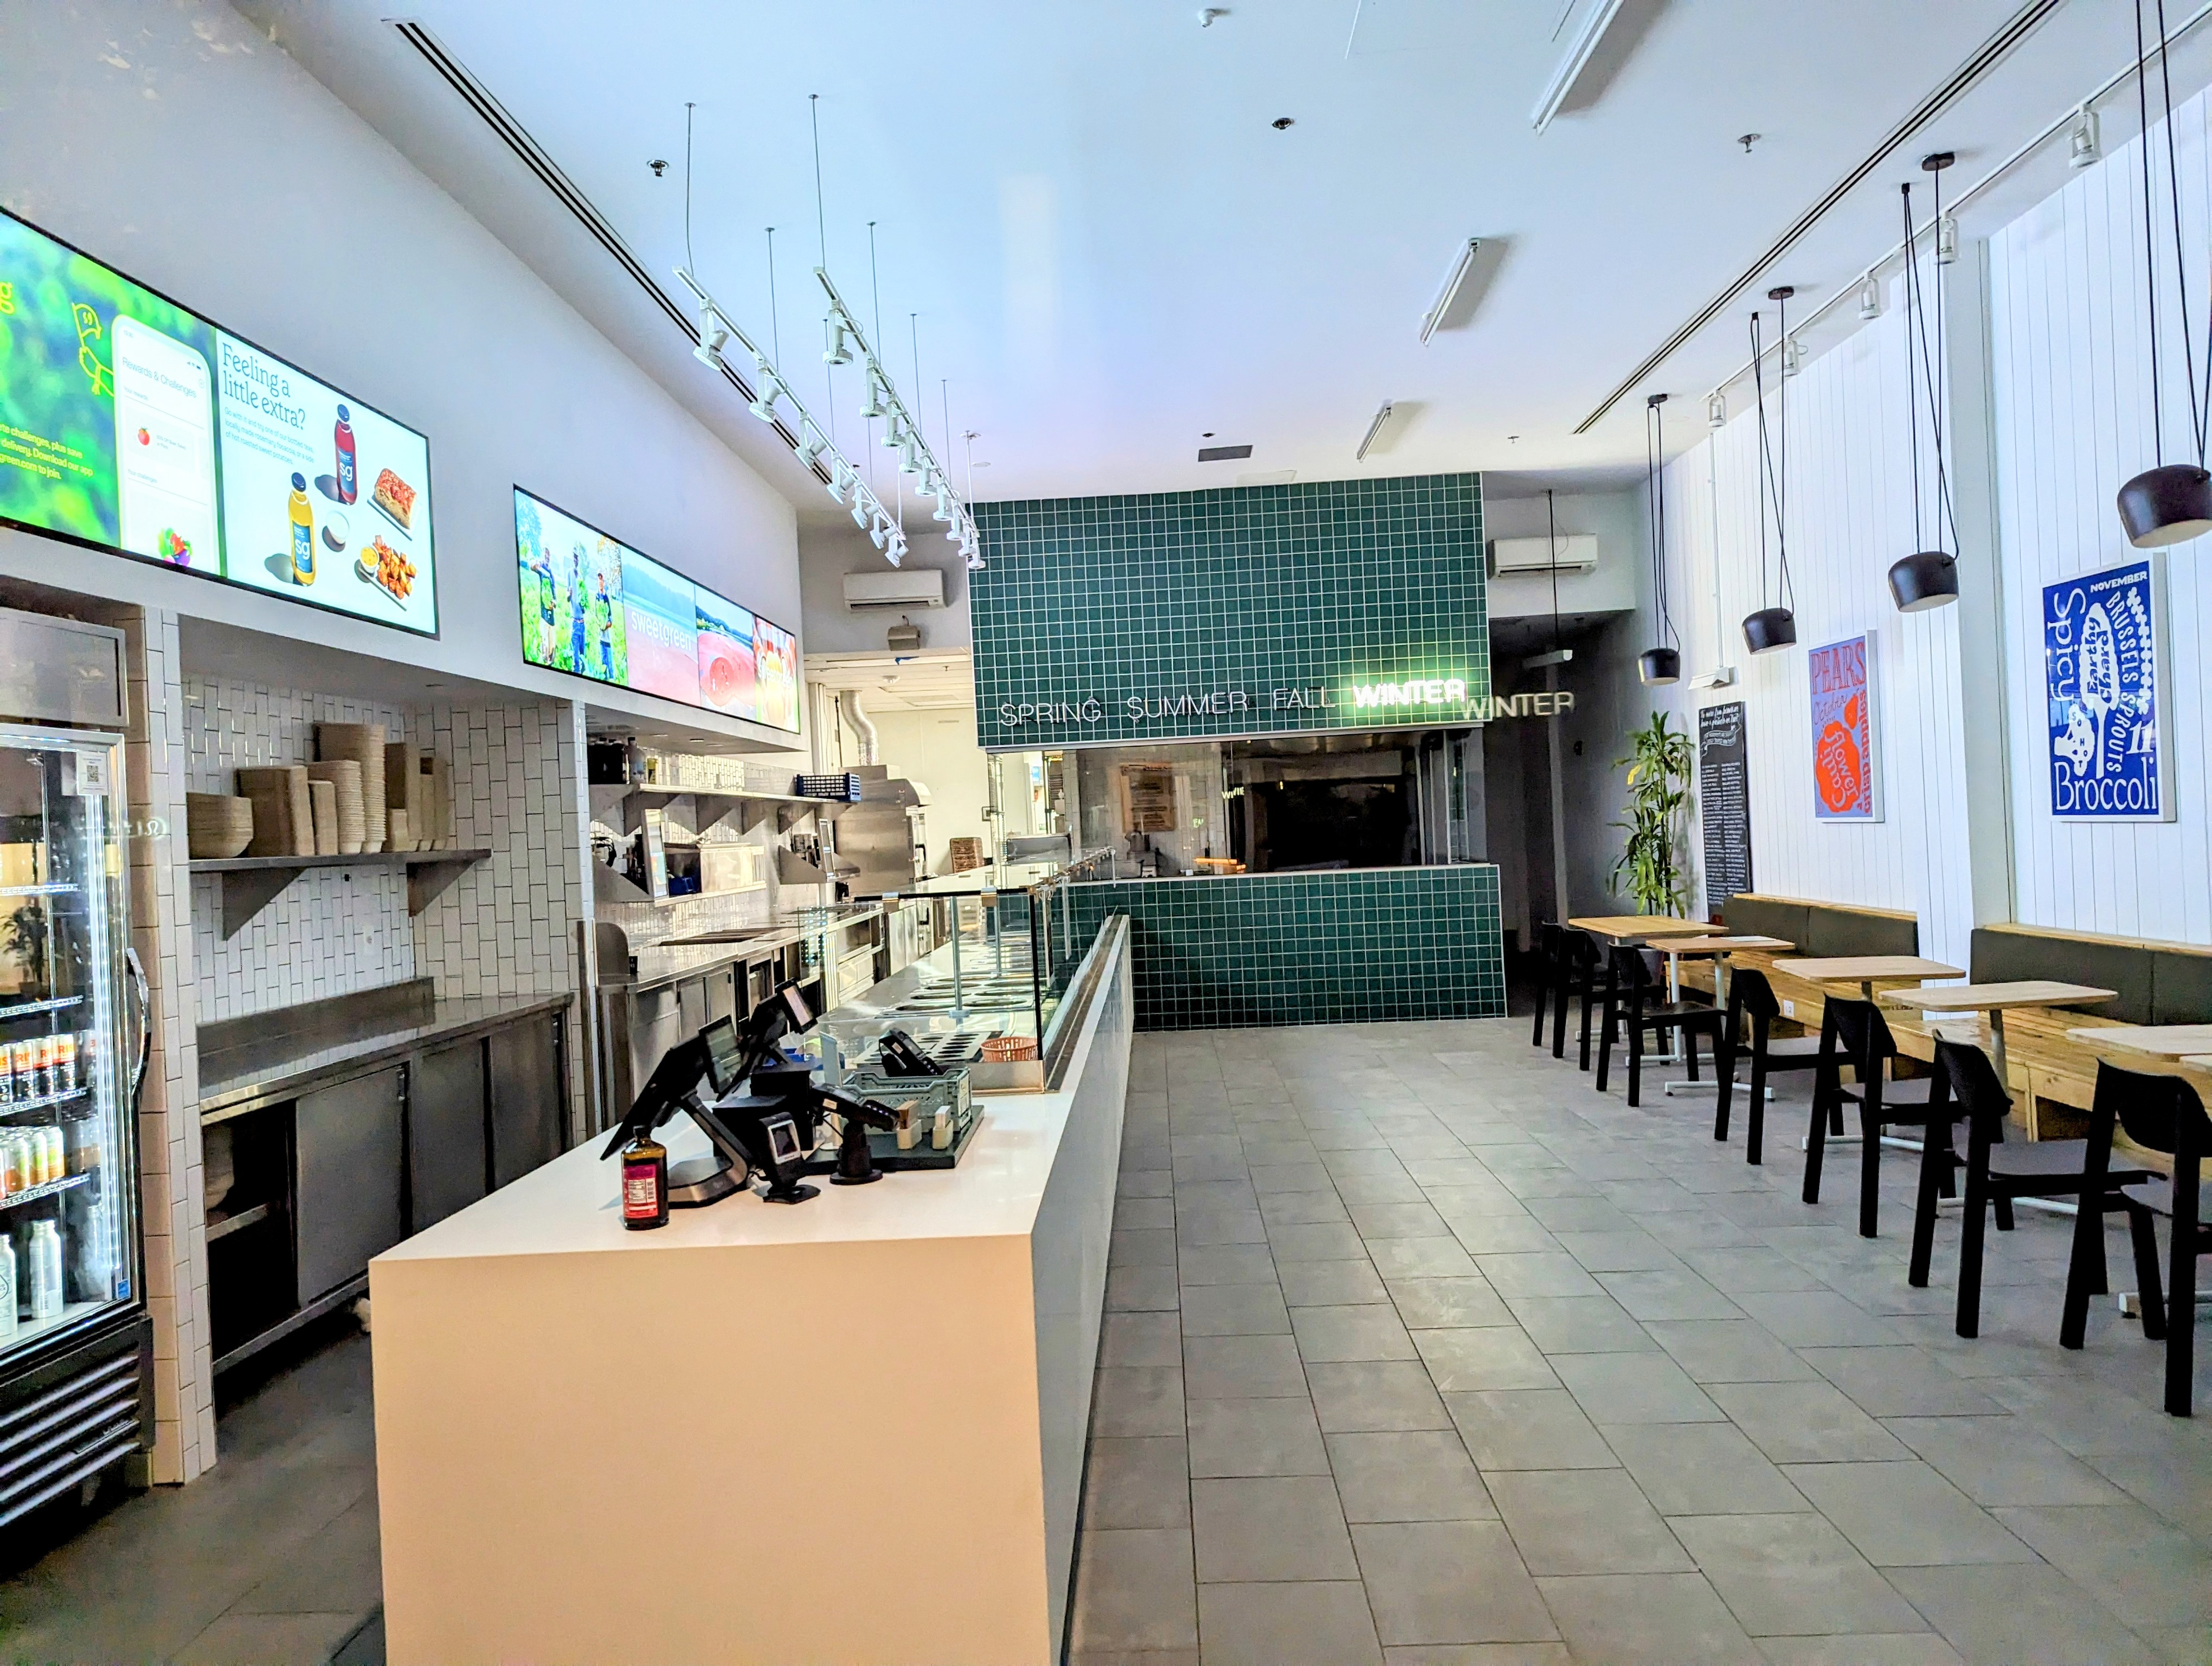 Sweetgreen reopens its Bethesda Row restaurant - WTOP News